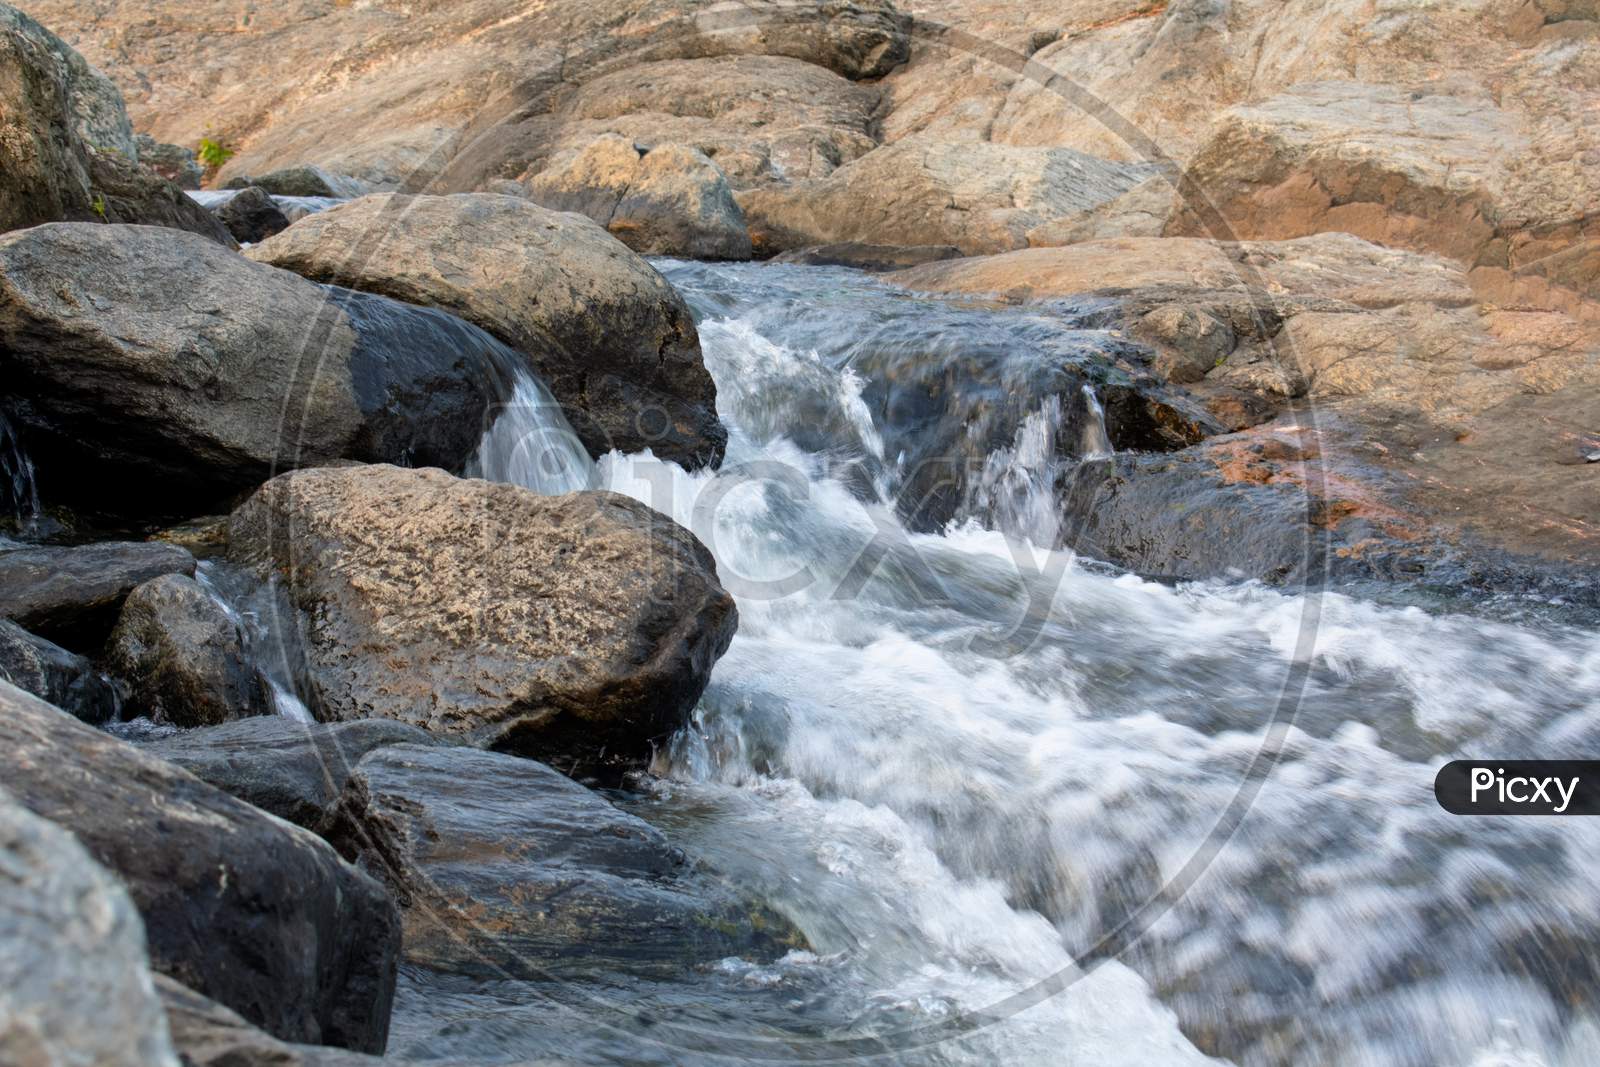 Long Exposure Shot Of A Water Flowing Between The Rocks 2020